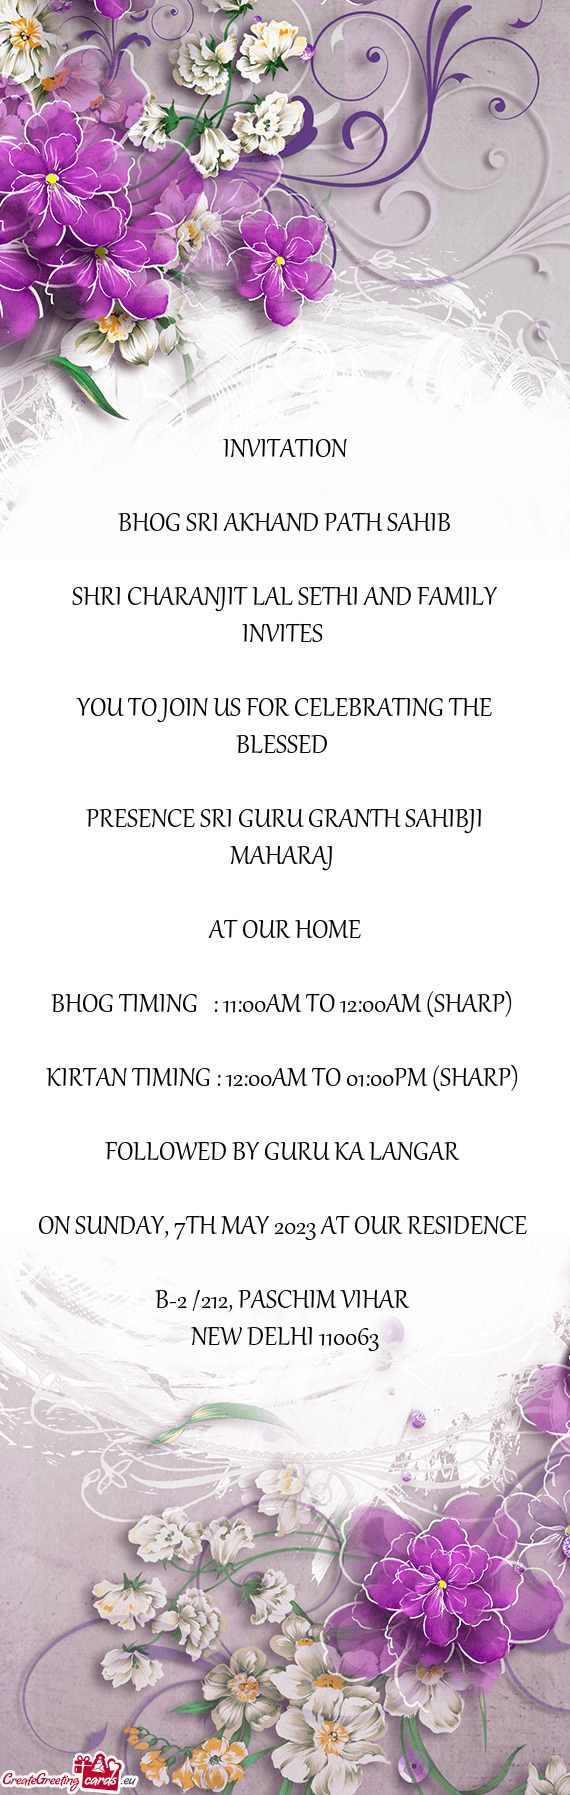 SHRI CHARANJIT LAL SETHI AND FAMILY INVITES